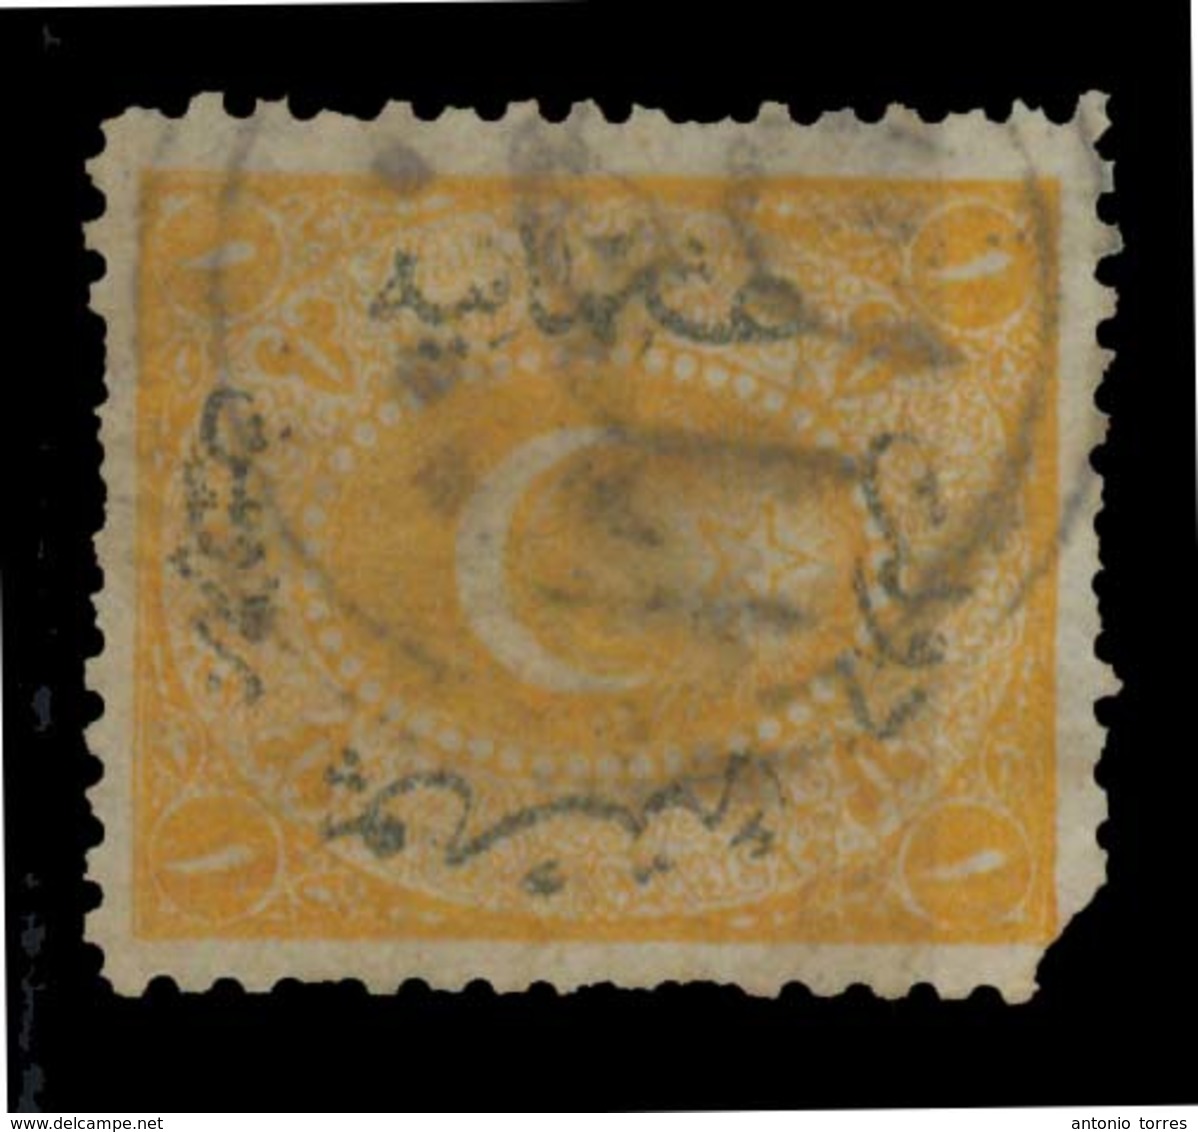 ALBANIA. C.1878. Turkish Period Stamp Cancelled Elbassan (x / R). V Scarce. Fine. - Albania